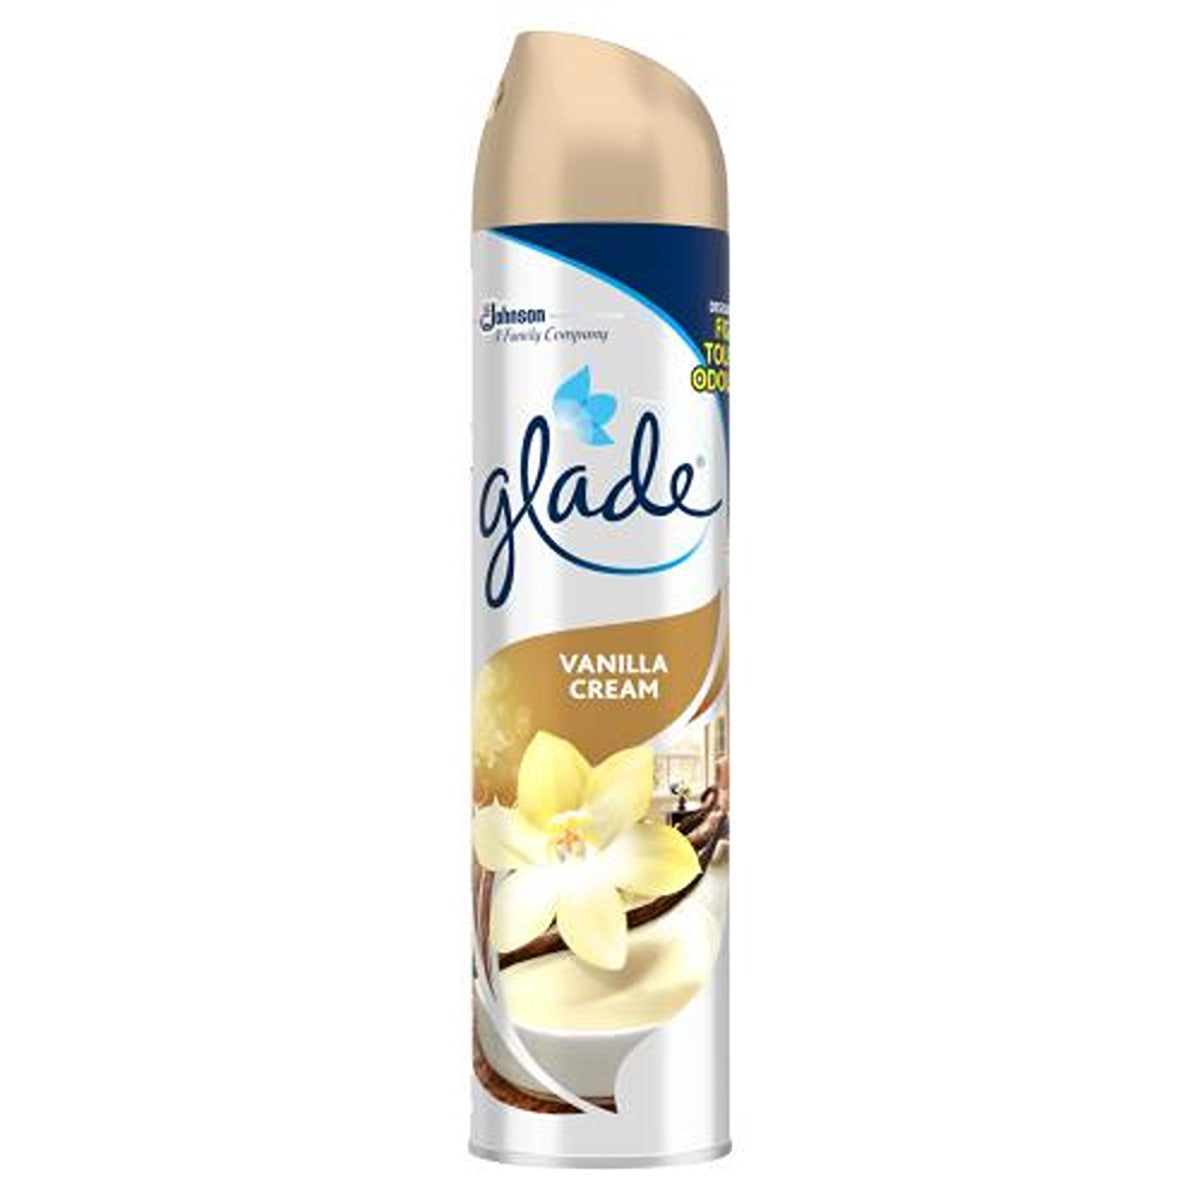 Glade - Vanilla Cream Air Freshener - 300ml - Continental Food Store